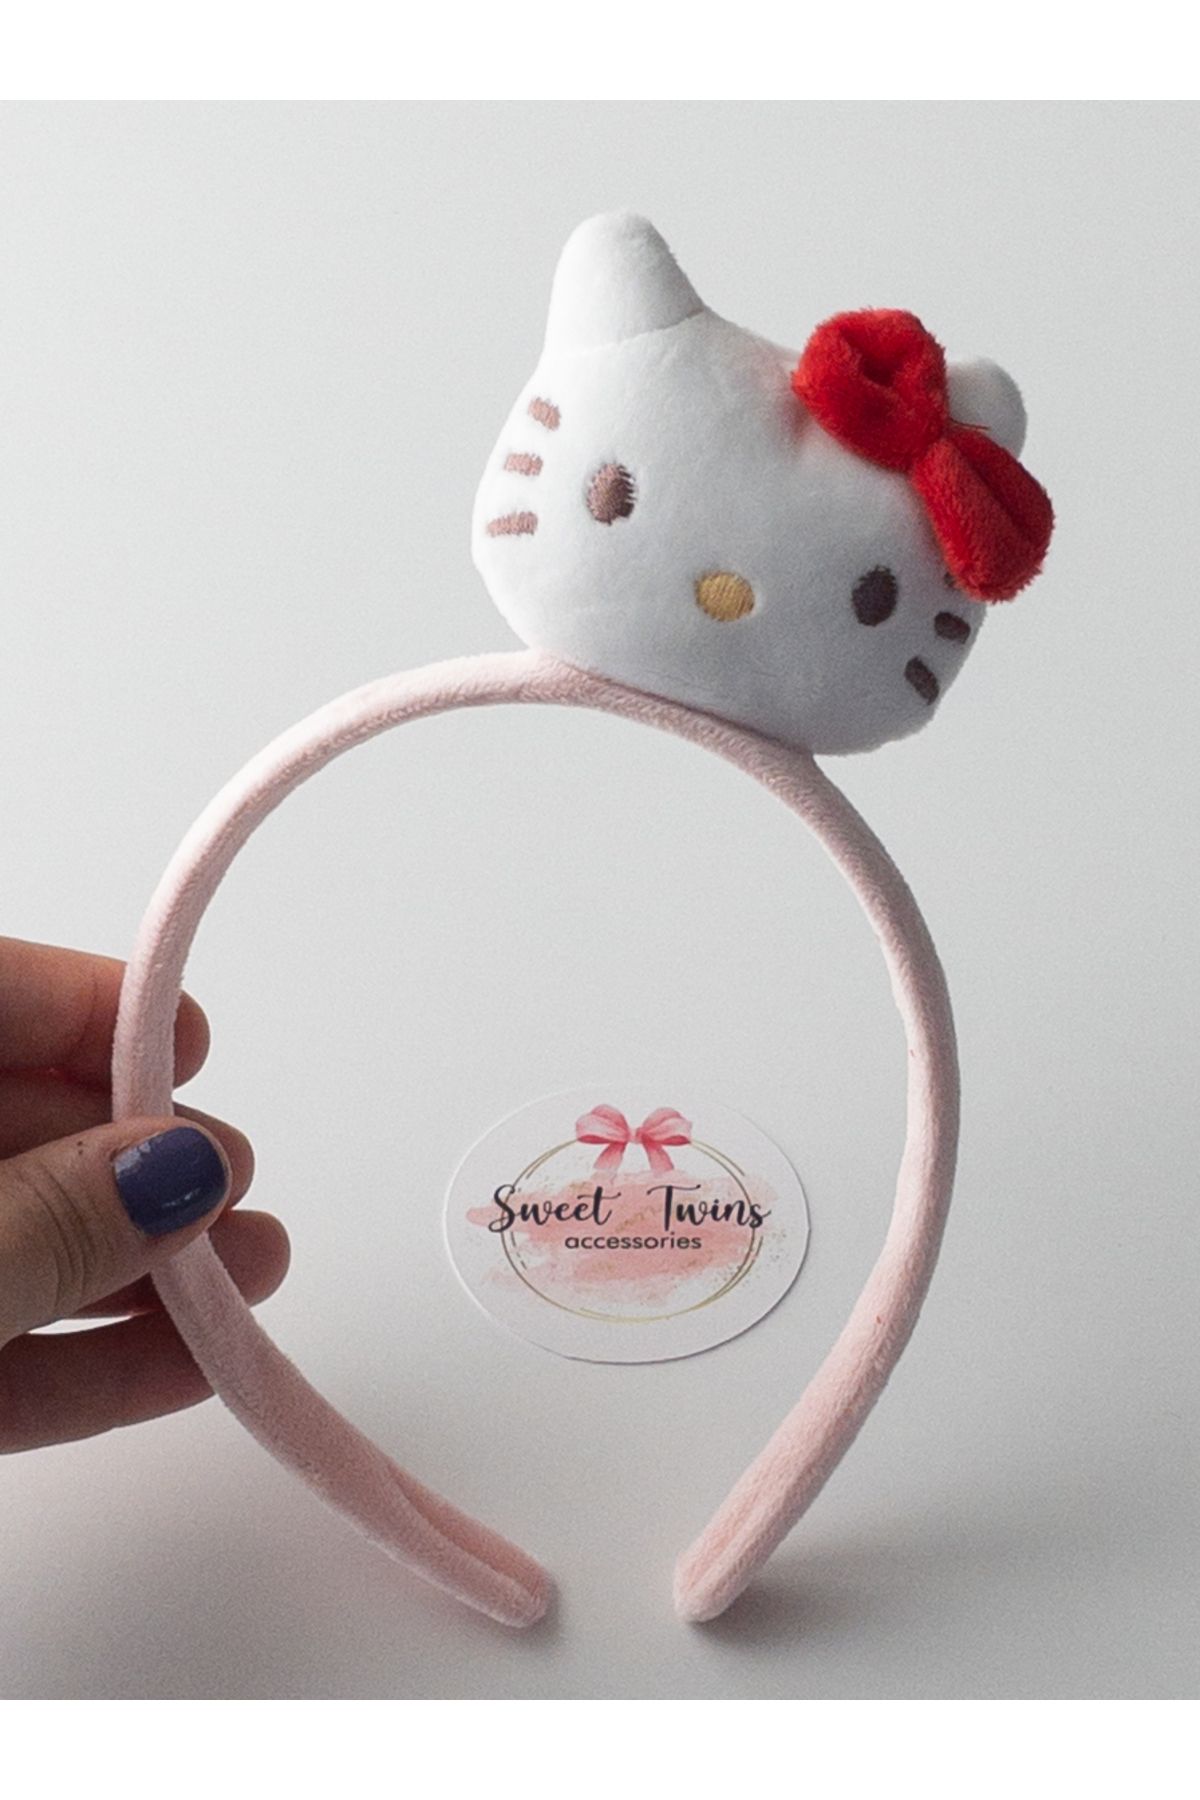 Sweet twins accessories Hello Kitty Taç